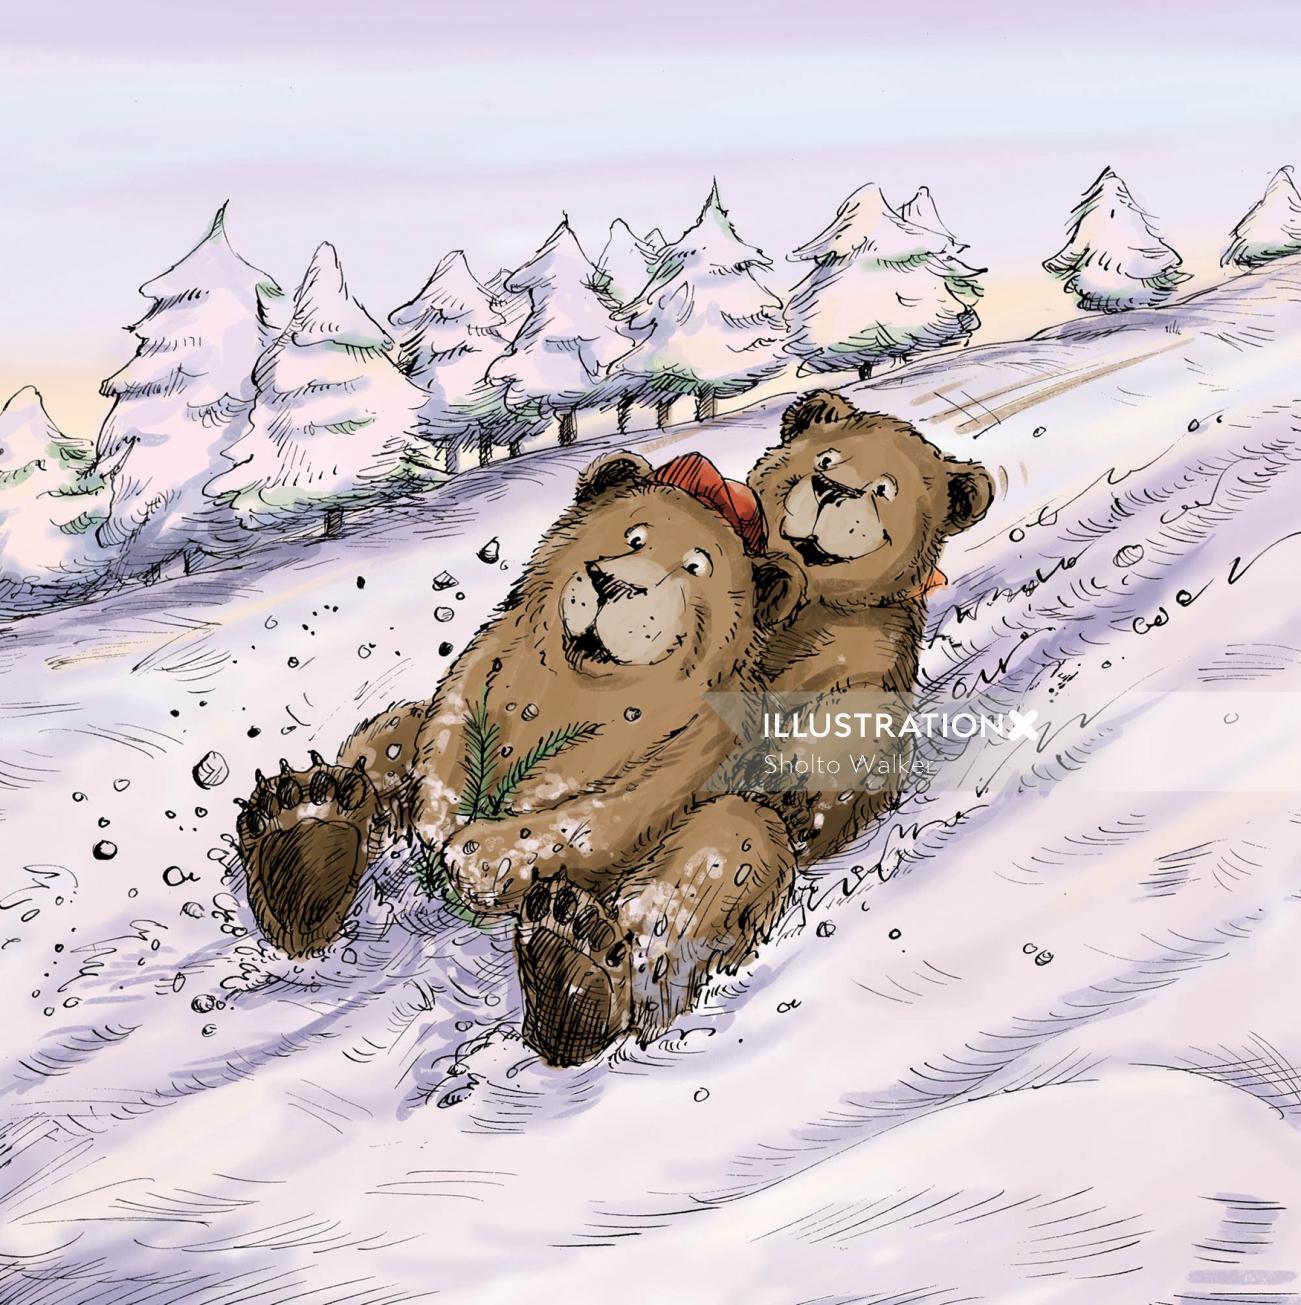 Bear cubs sliding in snowy hillside 